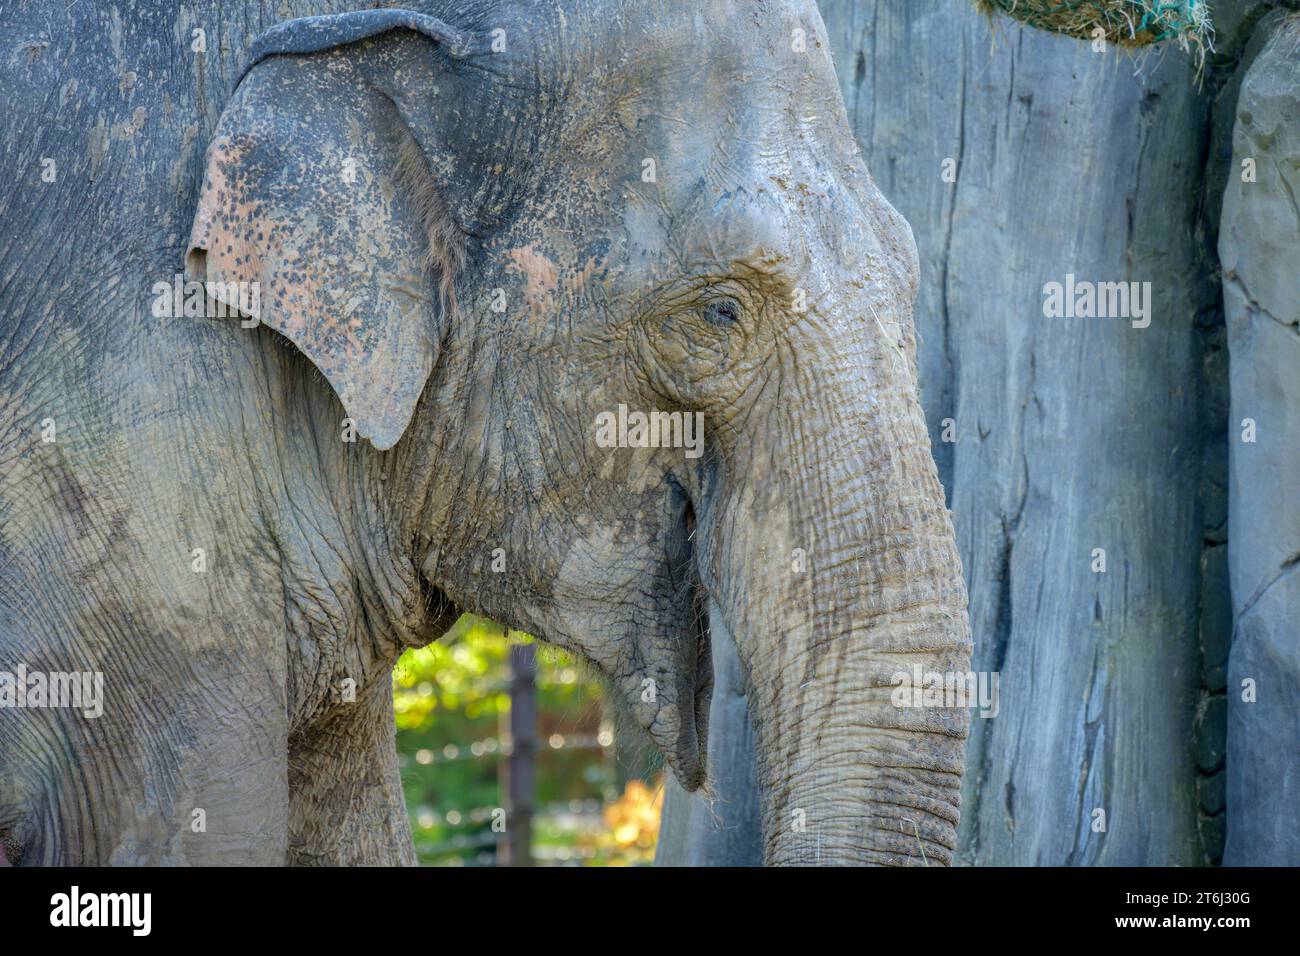 Allemagne, Baden-Wuerttemberg, Karlsruhe, éléphant indien au zoo. Banque D'Images